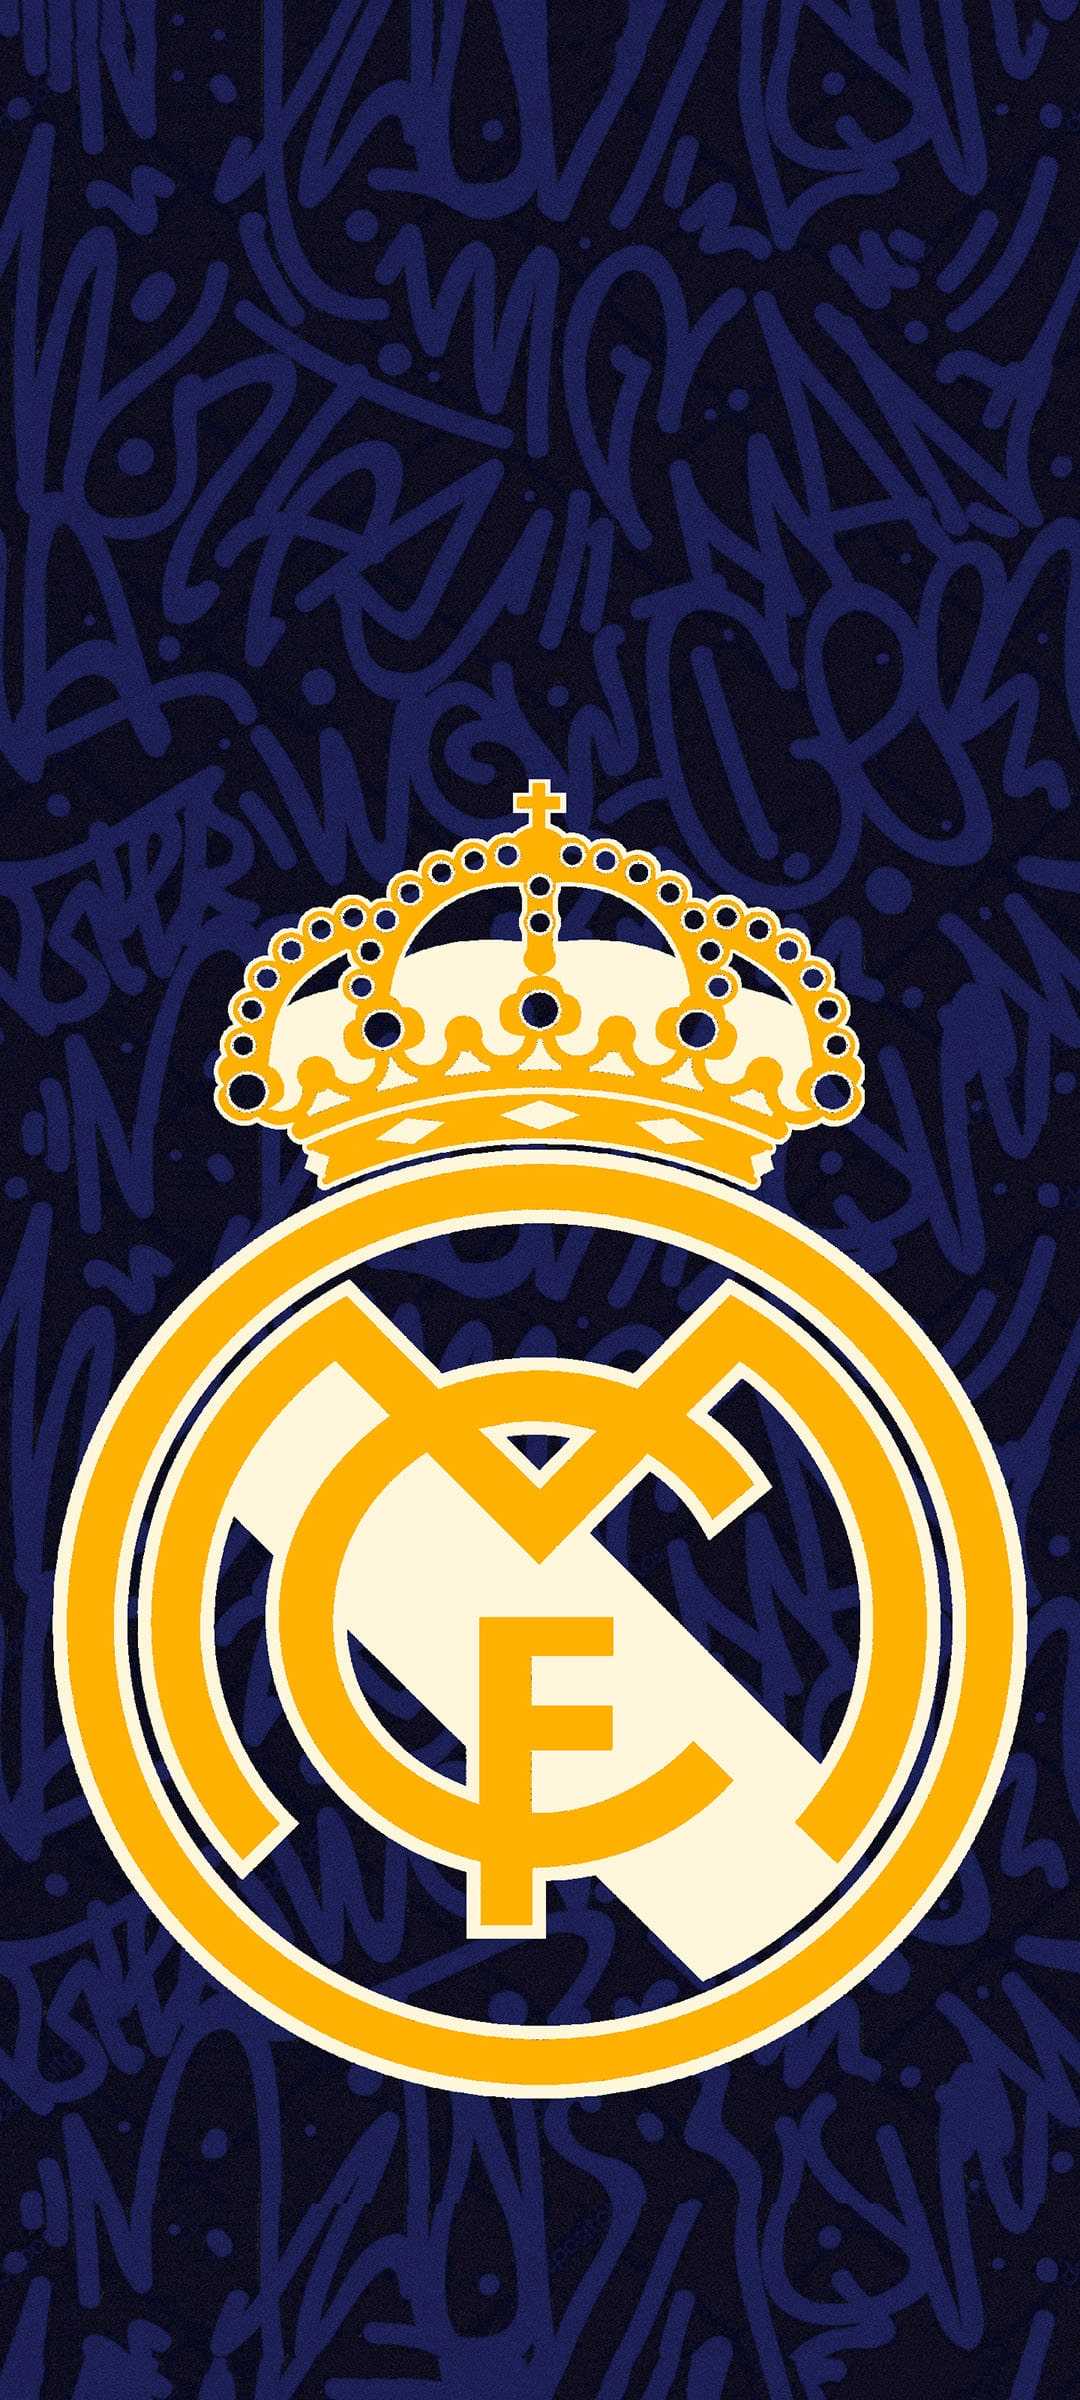 Real Madrid Wallpaper - iXpap